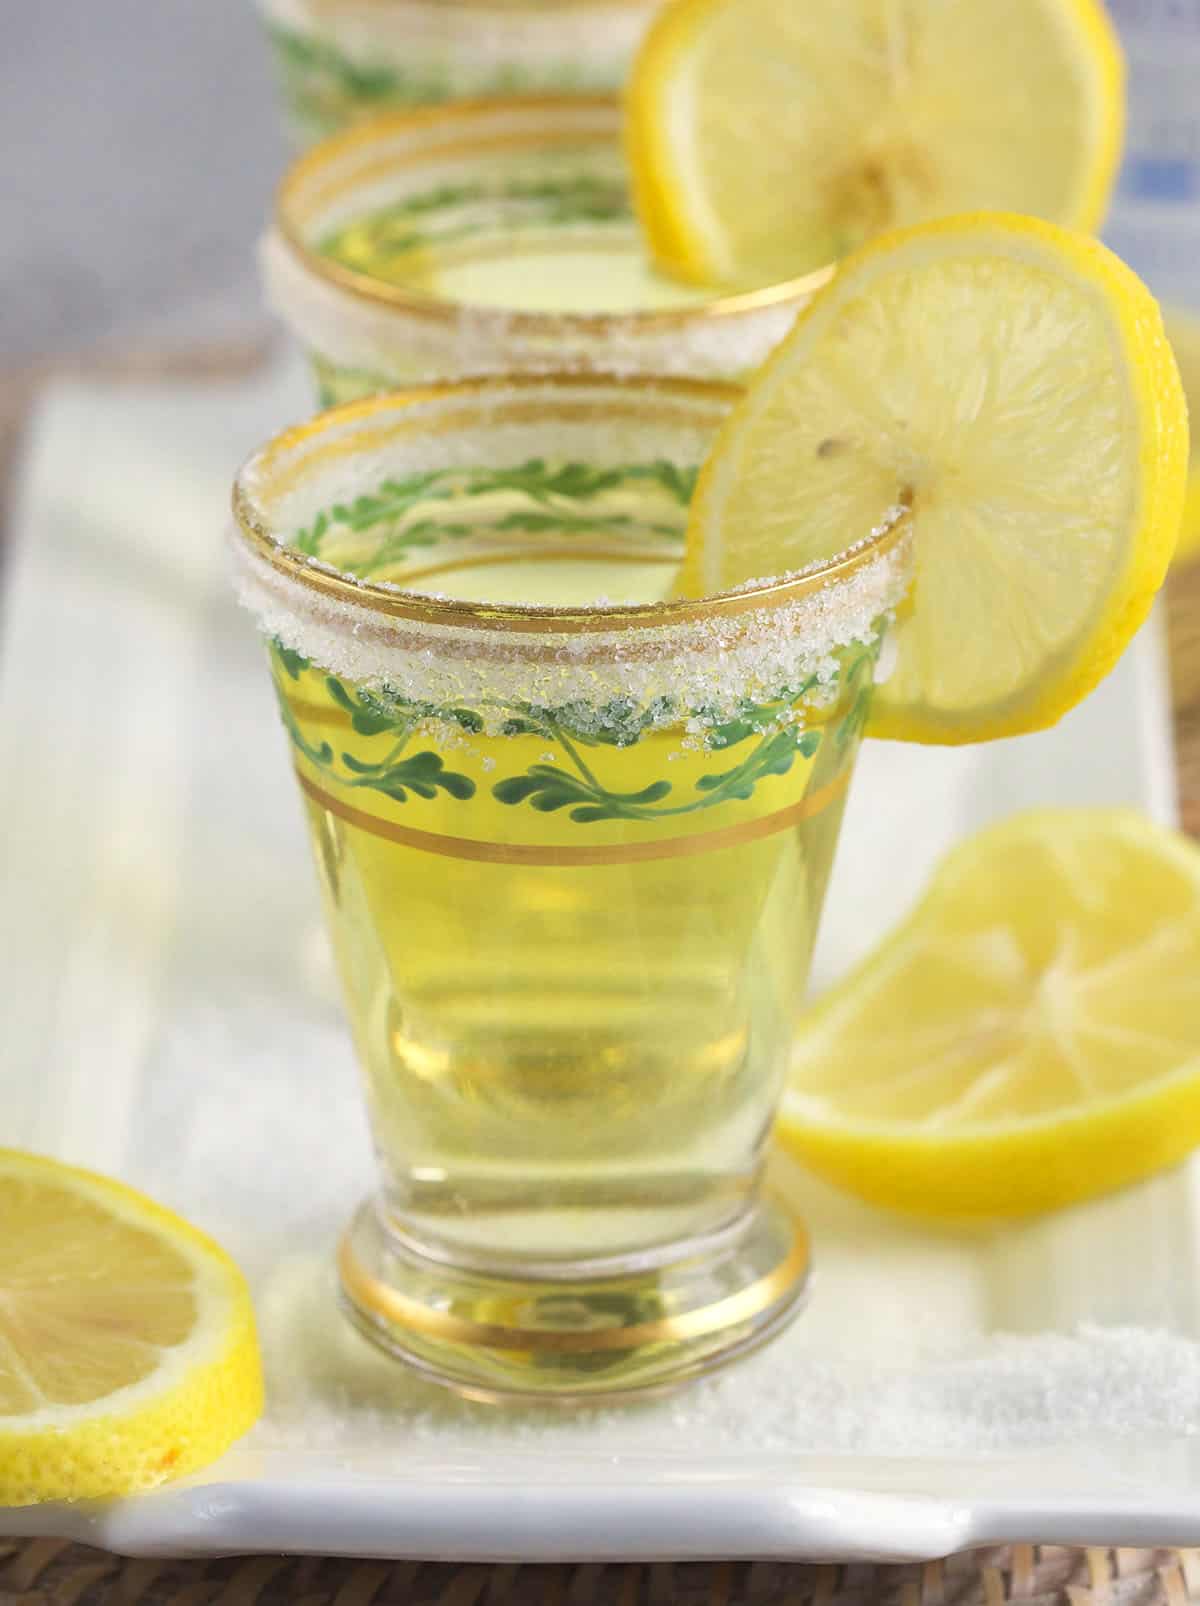 Several shot glasses are garnished with lemon slices and a sugar rim.